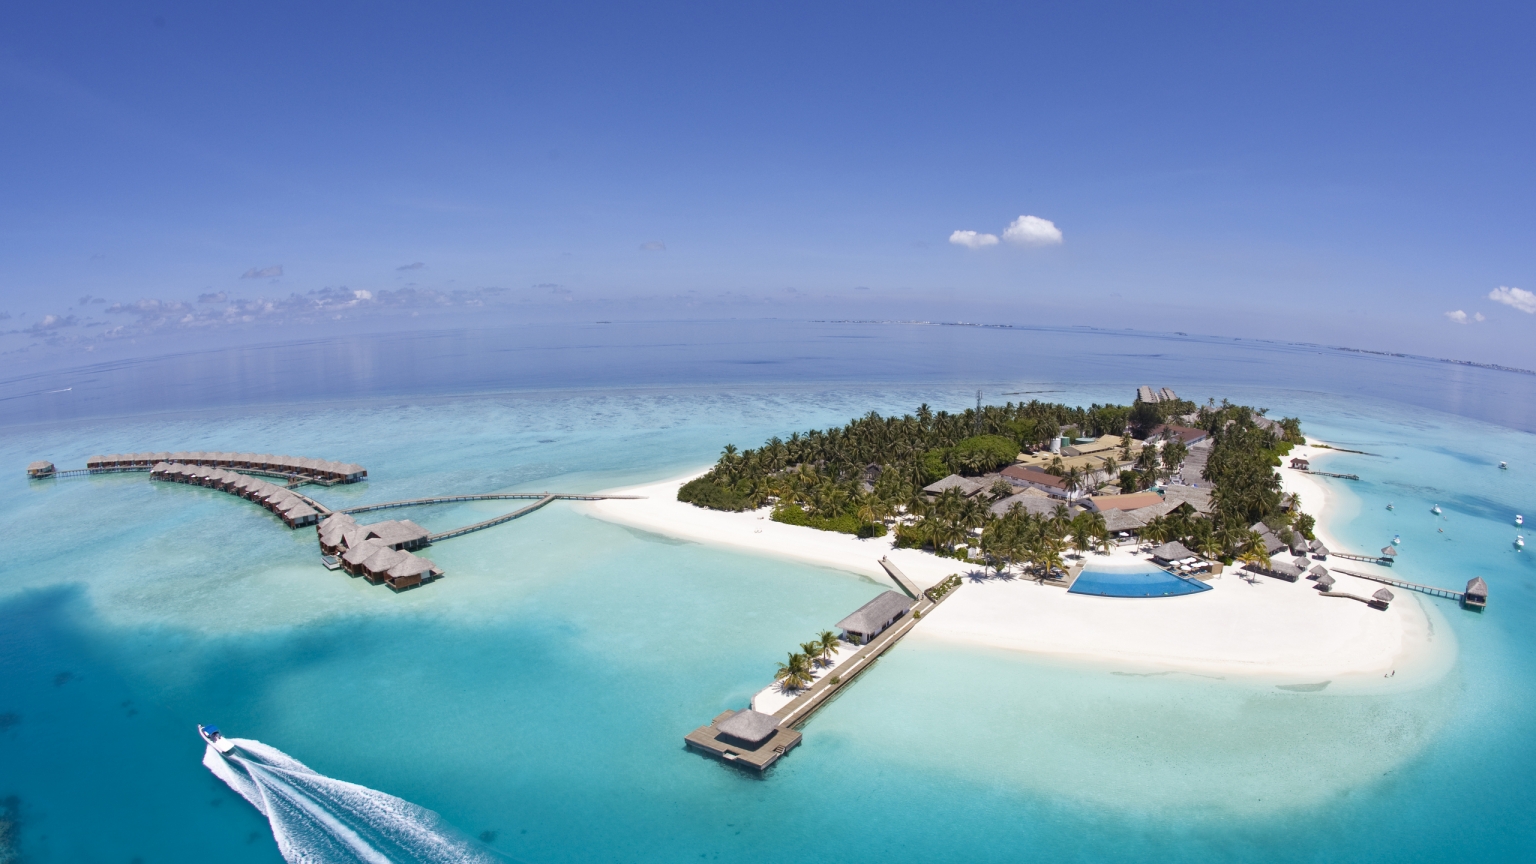 Maldives Island for 1536 x 864 HDTV resolution